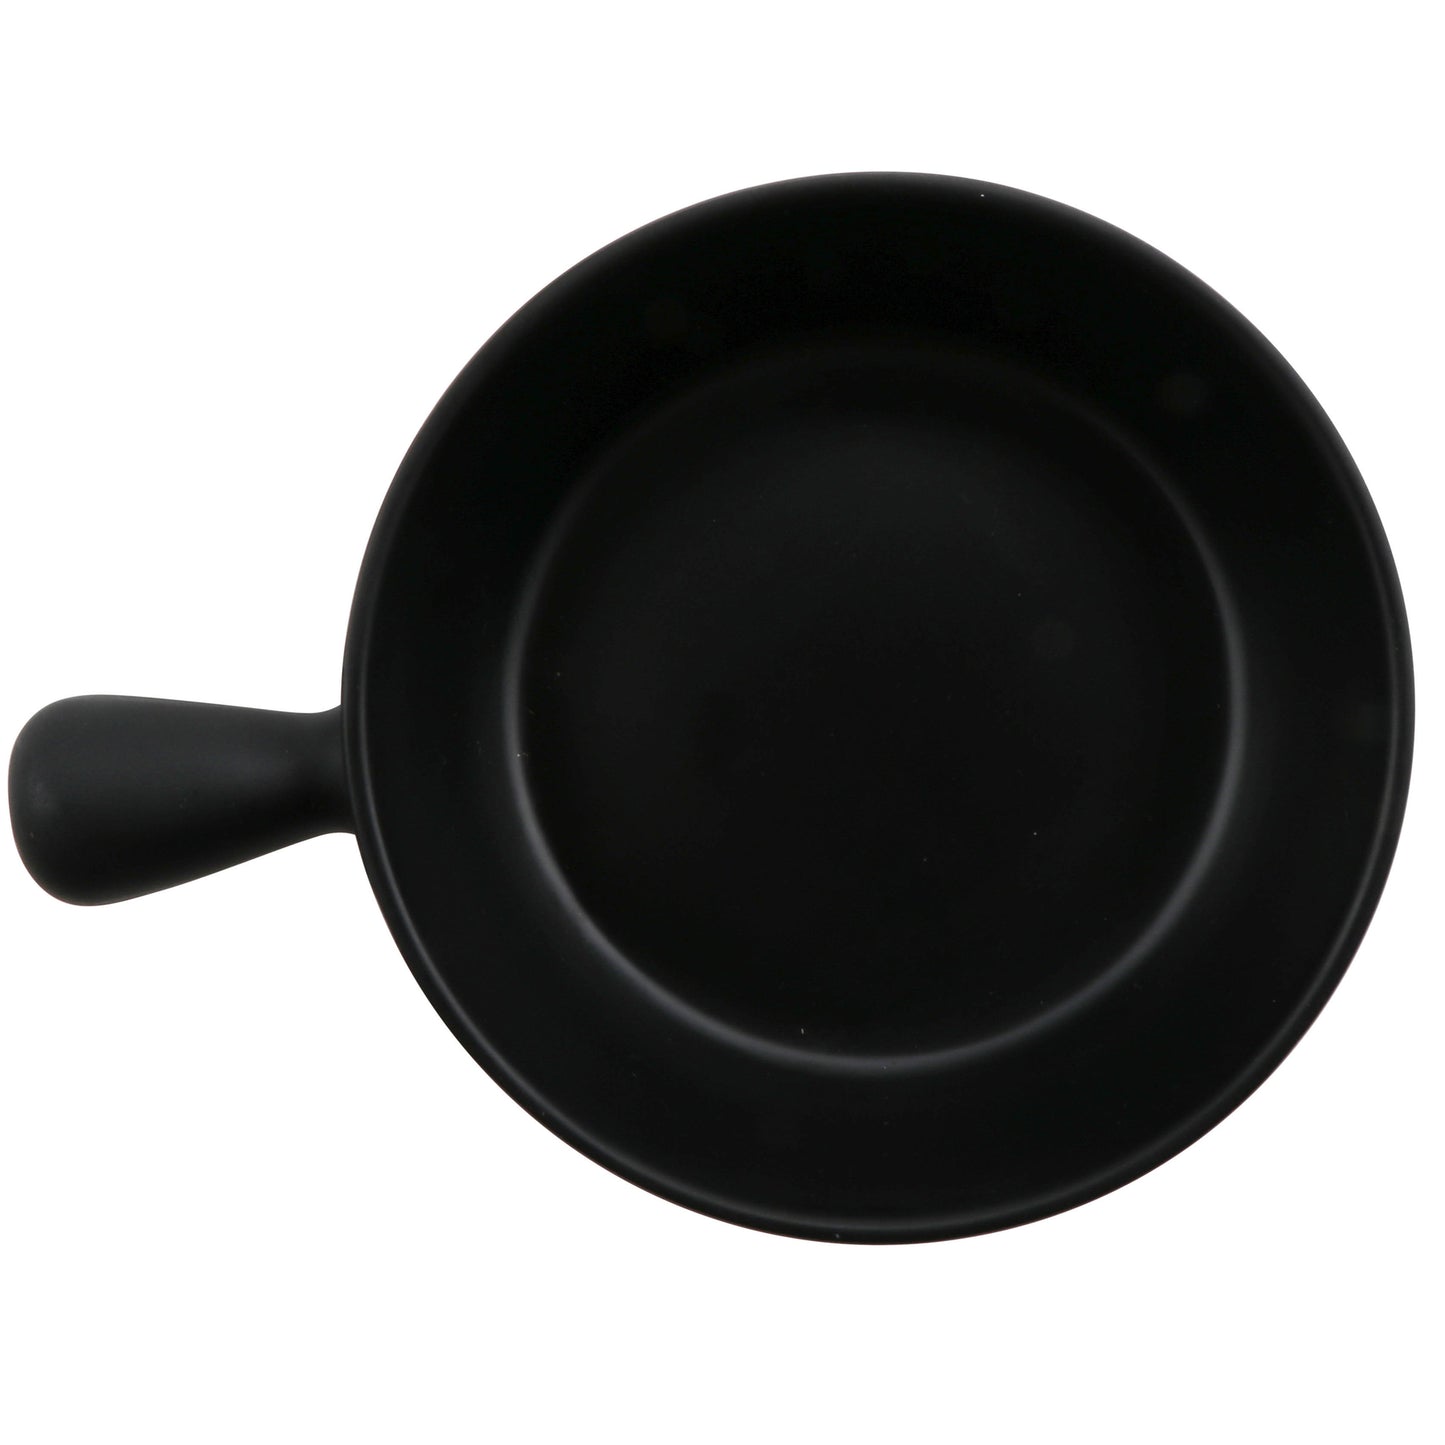 6oz explore melamine bowl with handle (8.5oz rim-full), 6"L x 4.43"W x 1.7"H, GET, cheforward